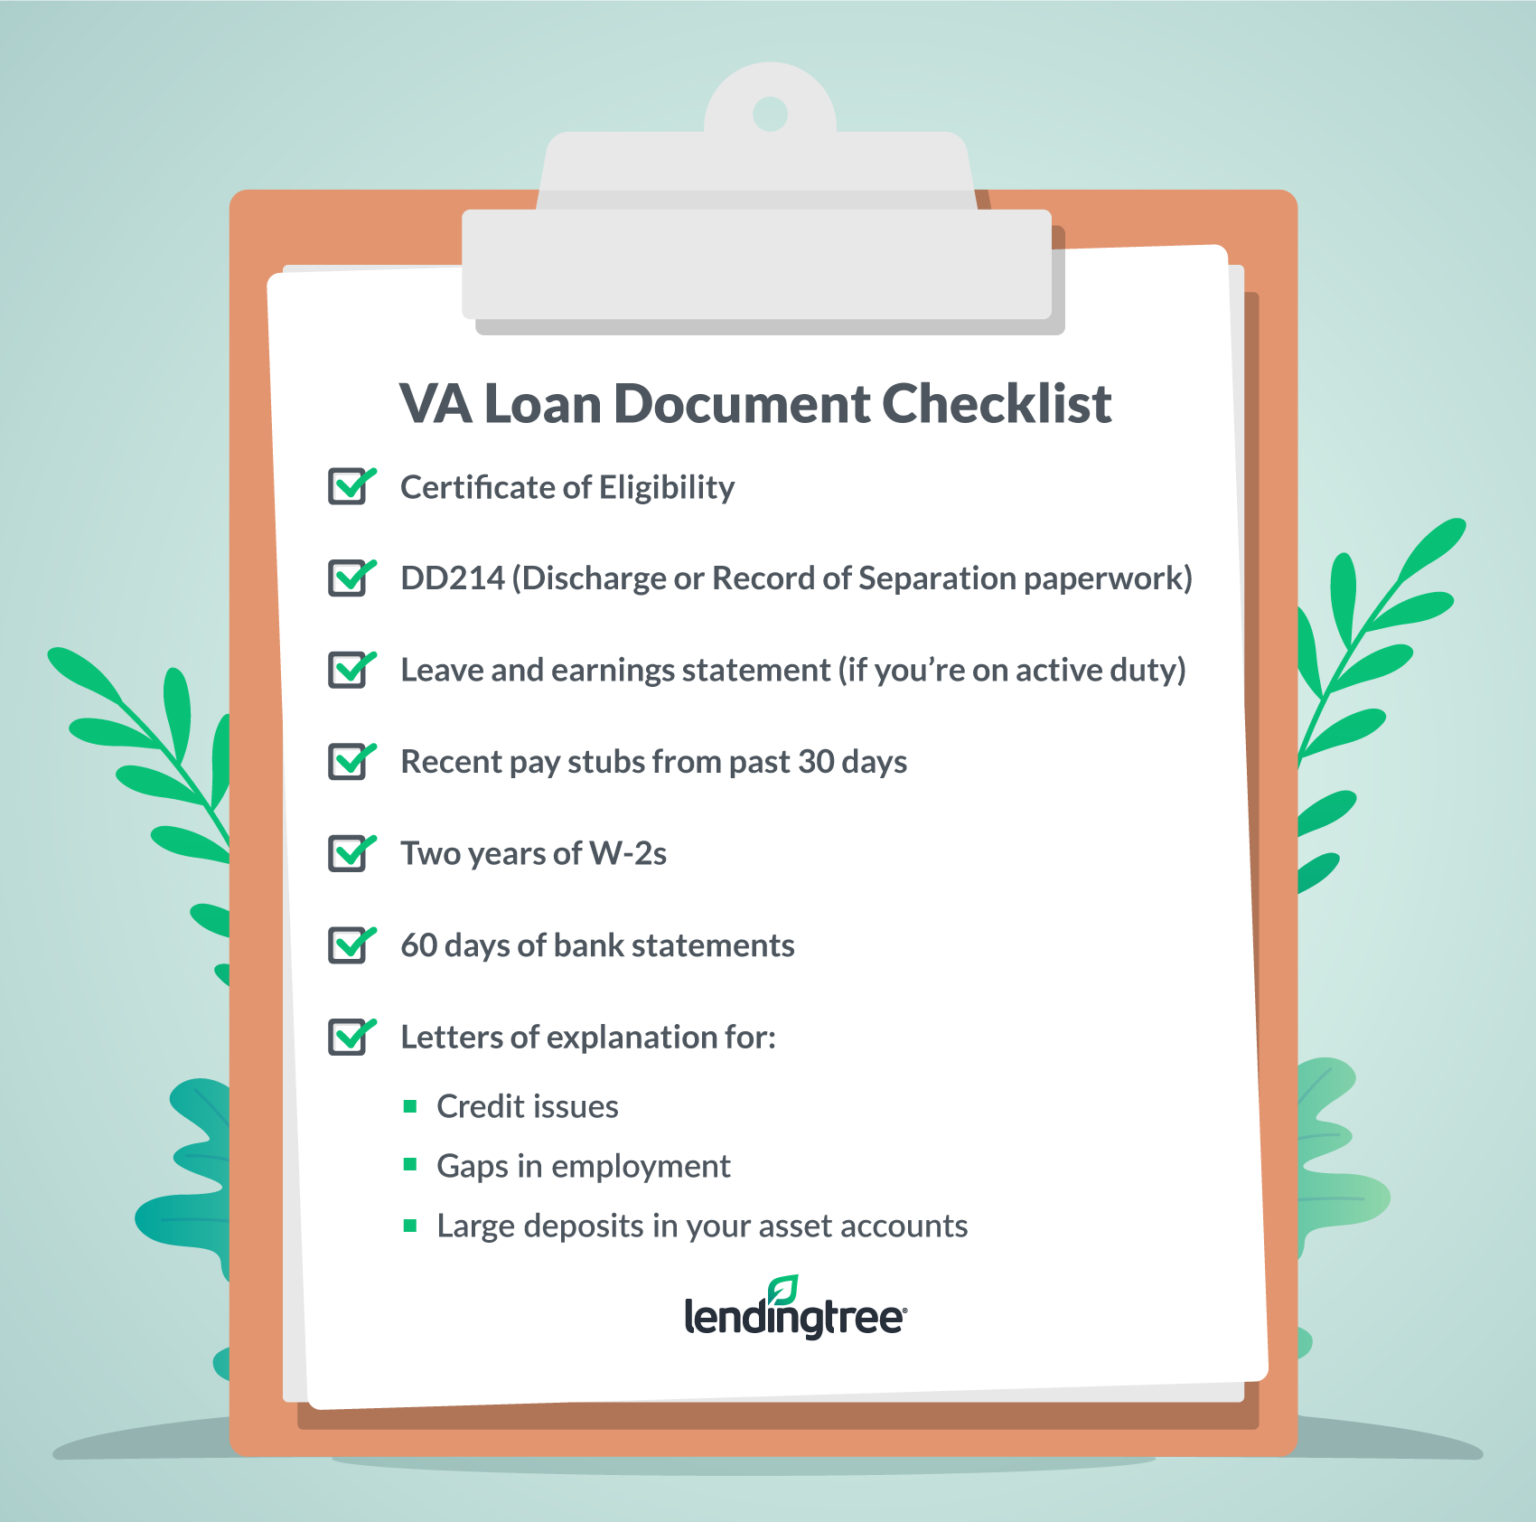 How to Get a VA Loan LendingTree